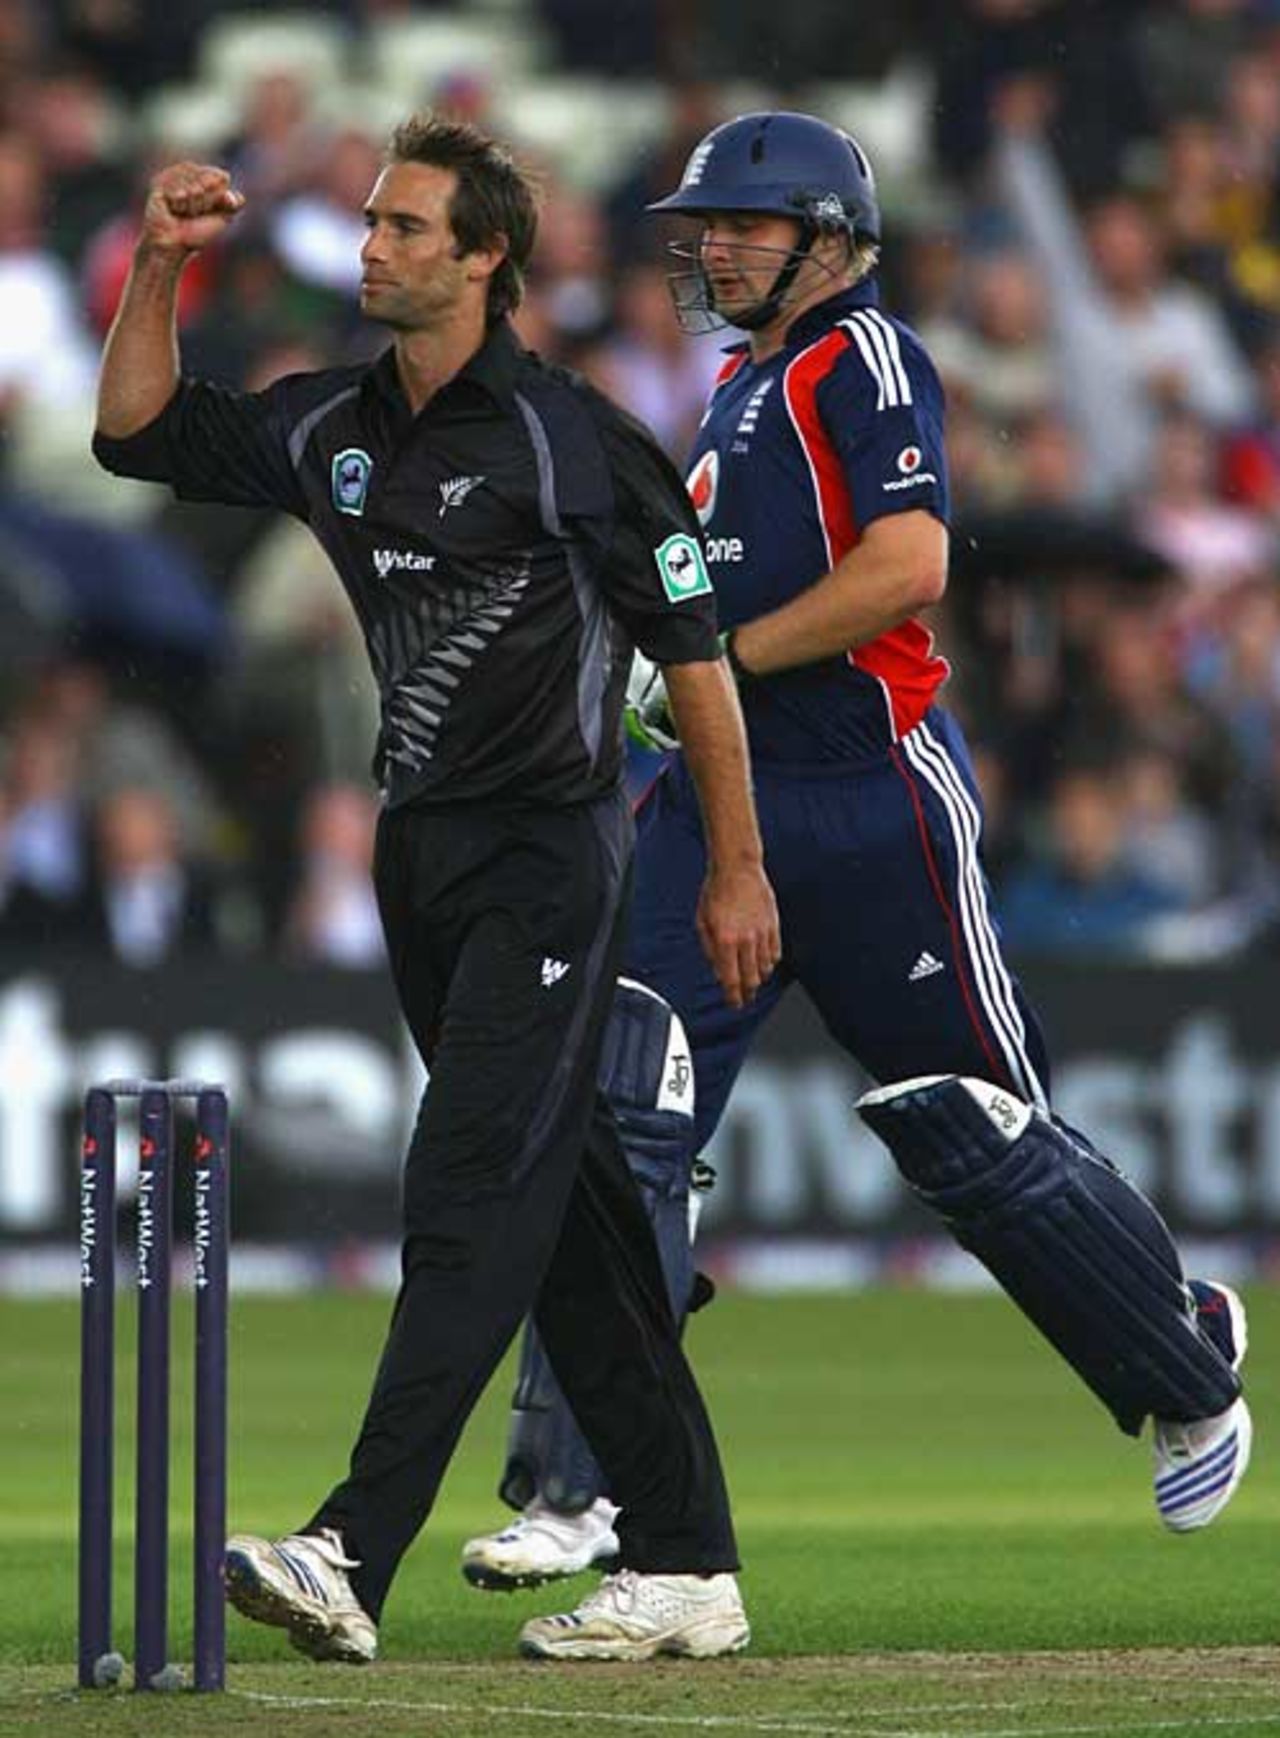 Grant Elliott picks up his first ODI wicket by removing Luke Wright, England v New Zealand, 2nd ODI, Edgbaston, June 18, 2008